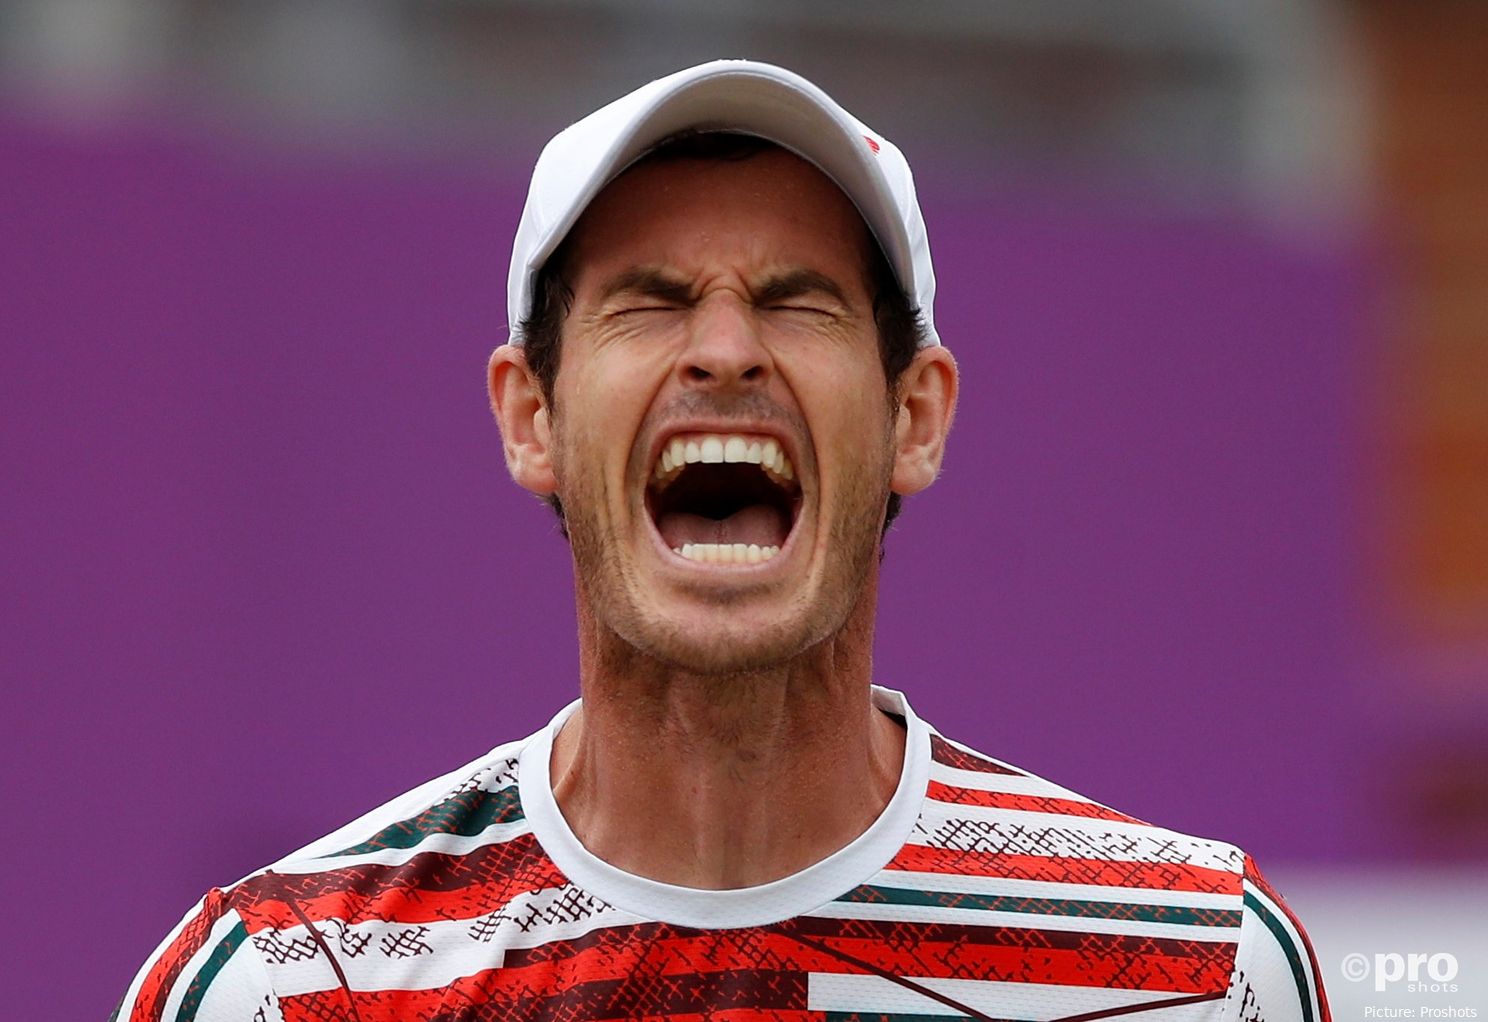 Bild Andy Murray; Kopf, Augen geschlossem, Mund zum Schrei geöffnet&amp;lt;br&amp;gt;